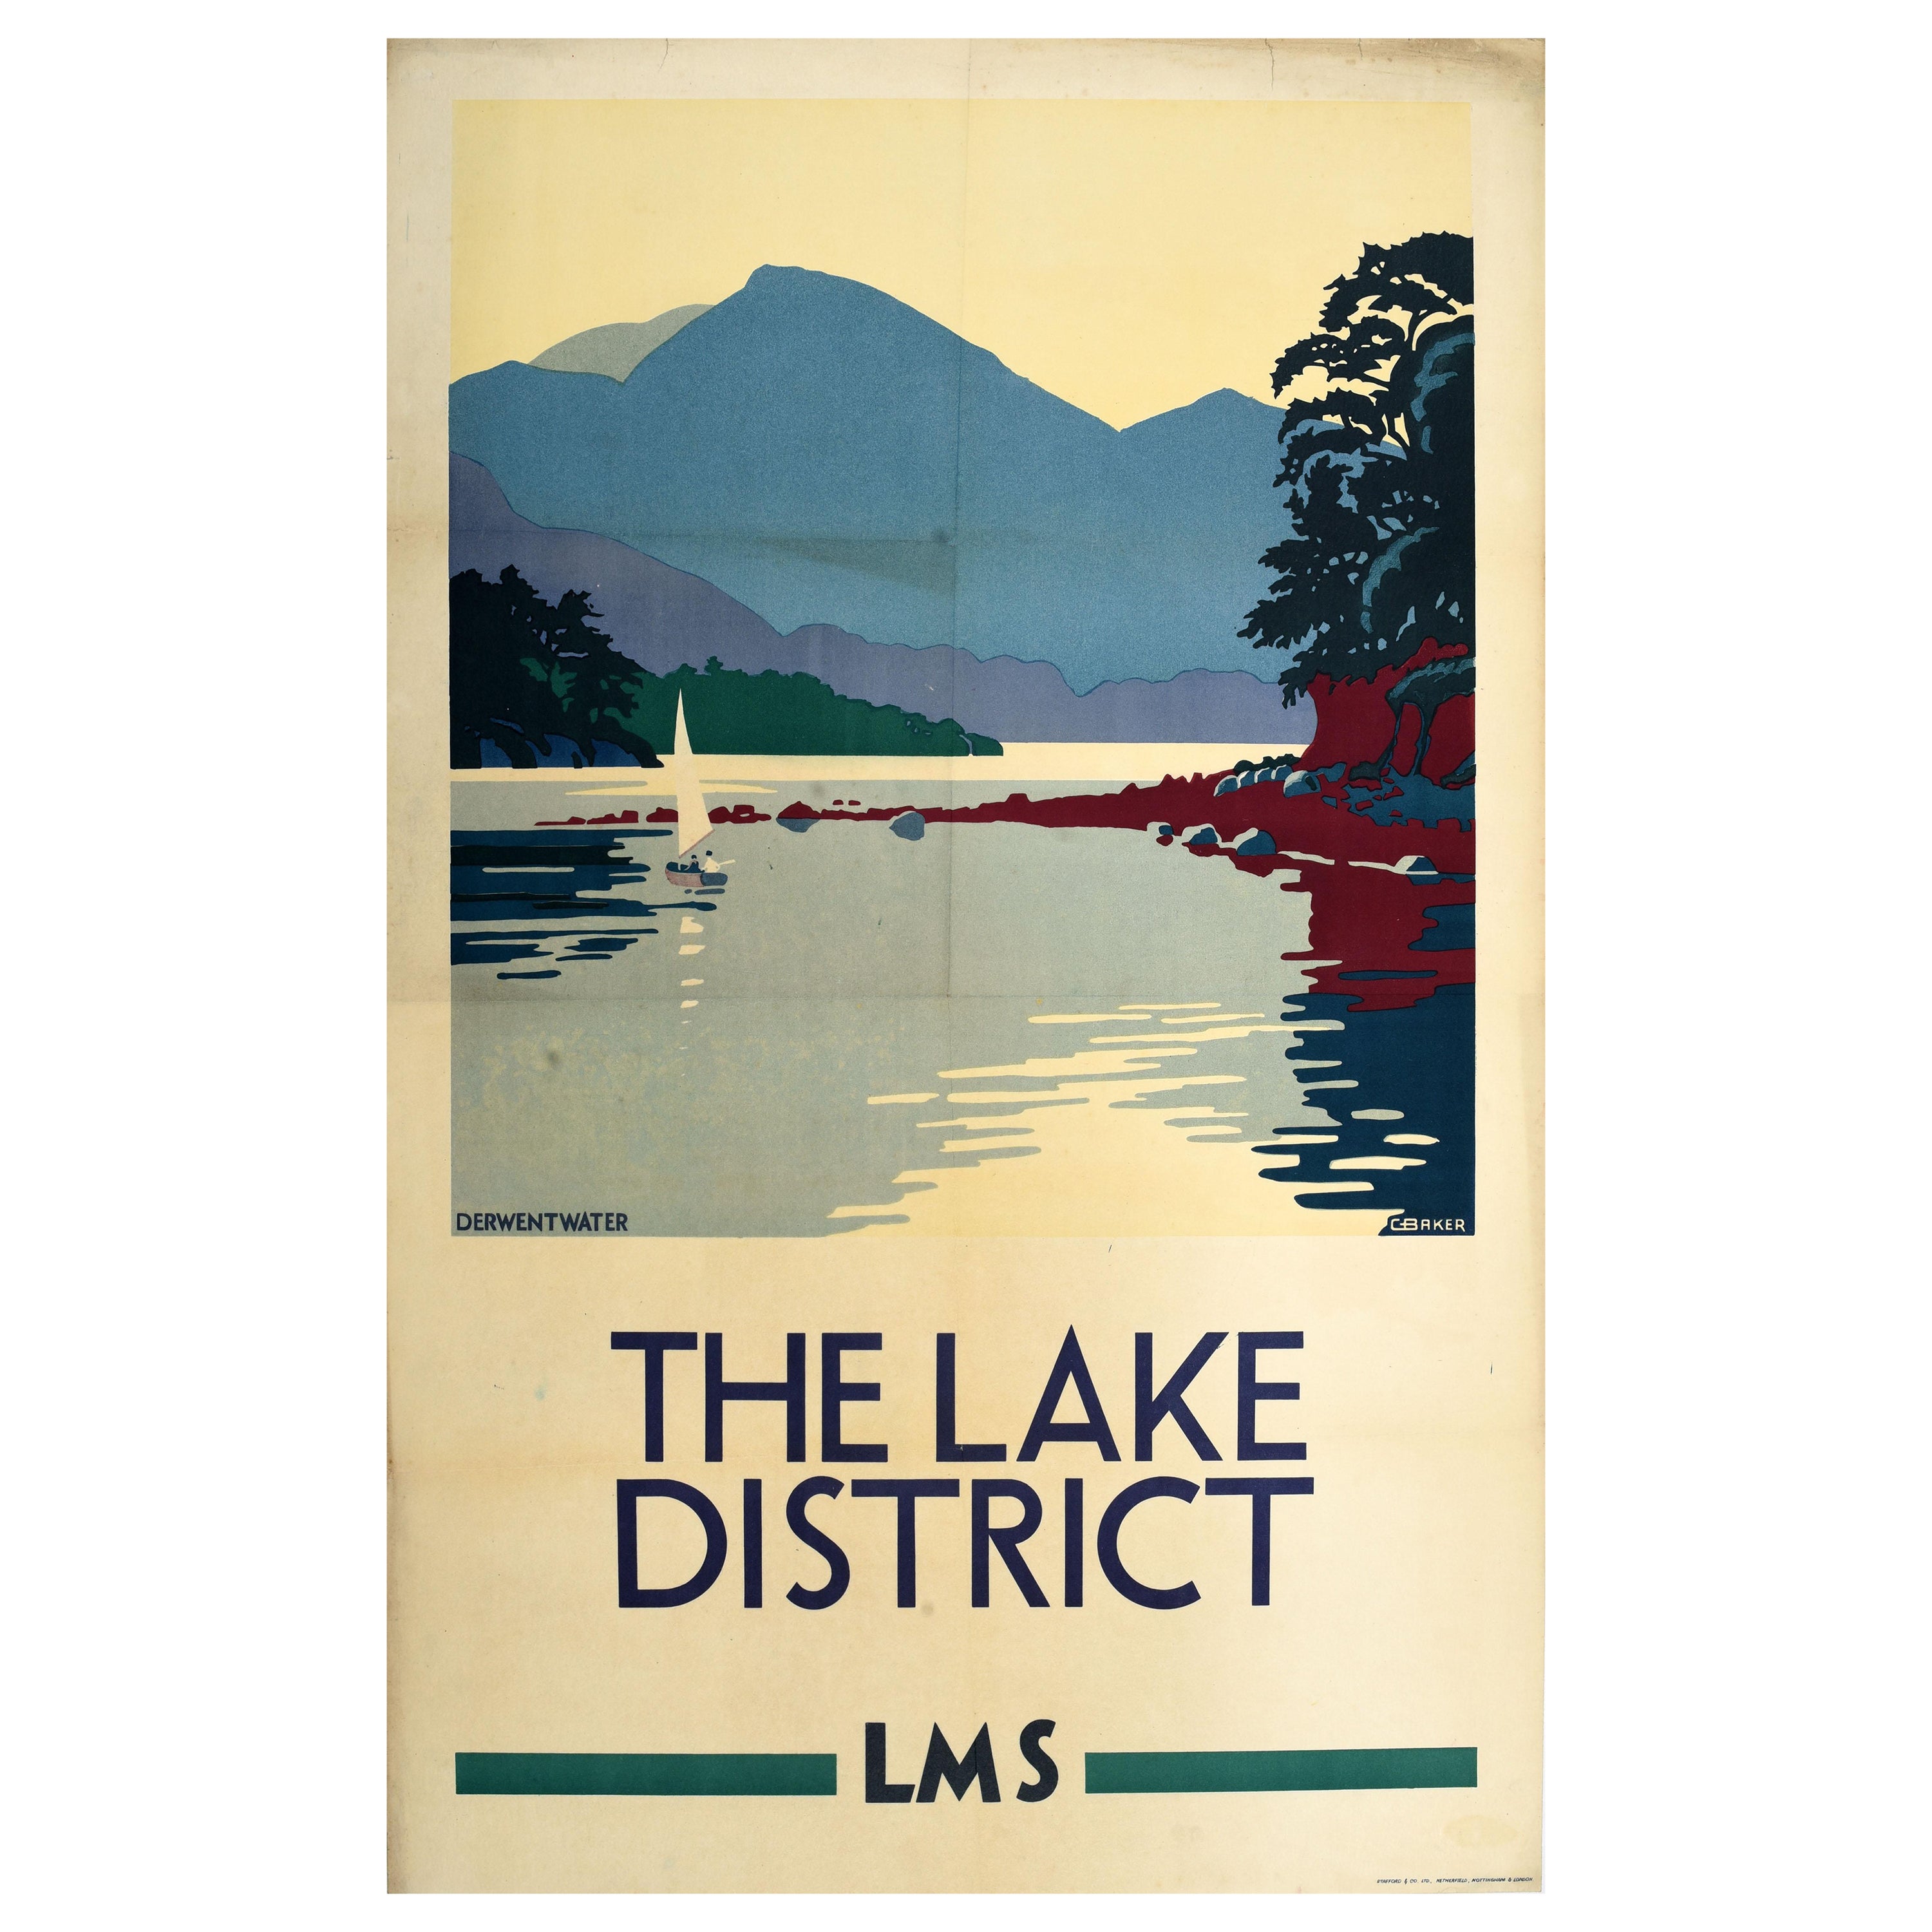 Affiche vintage originale de la LMS Railway du Lake District Derwentwater Cumbria, Angleterre